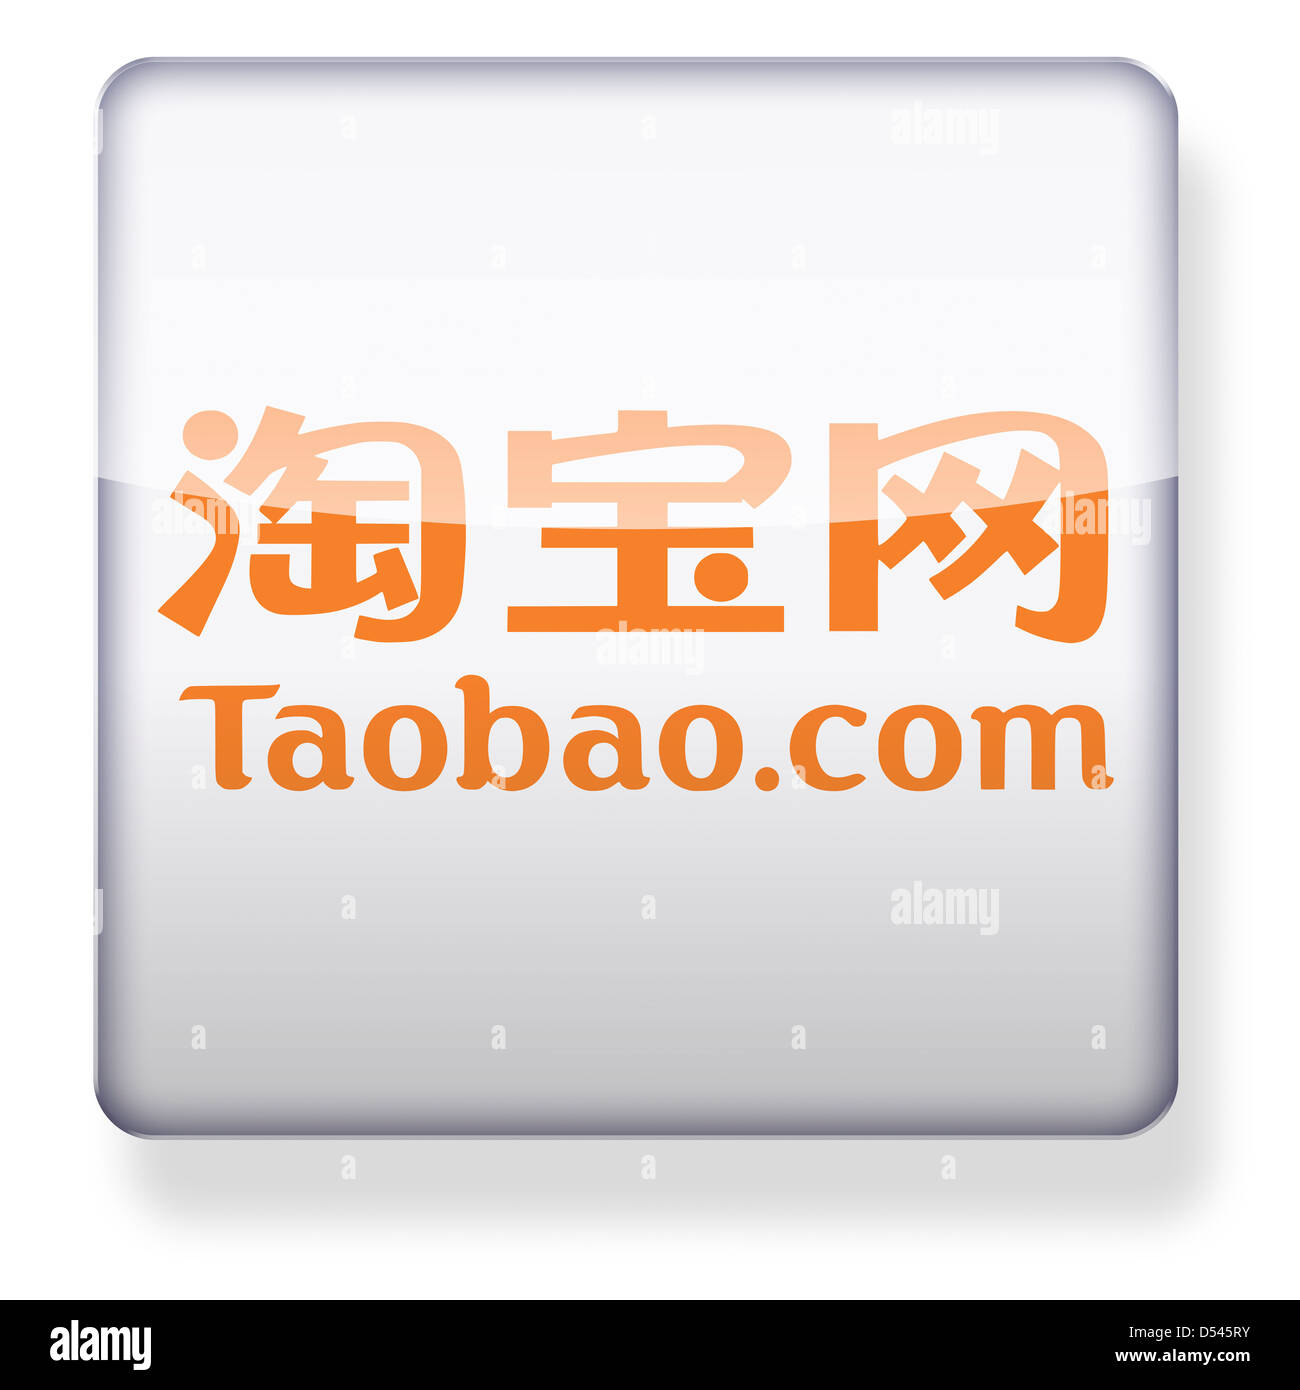 tabao.com Logo als ein app-Symbol. Clipping-Pfad enthalten. Stockfoto